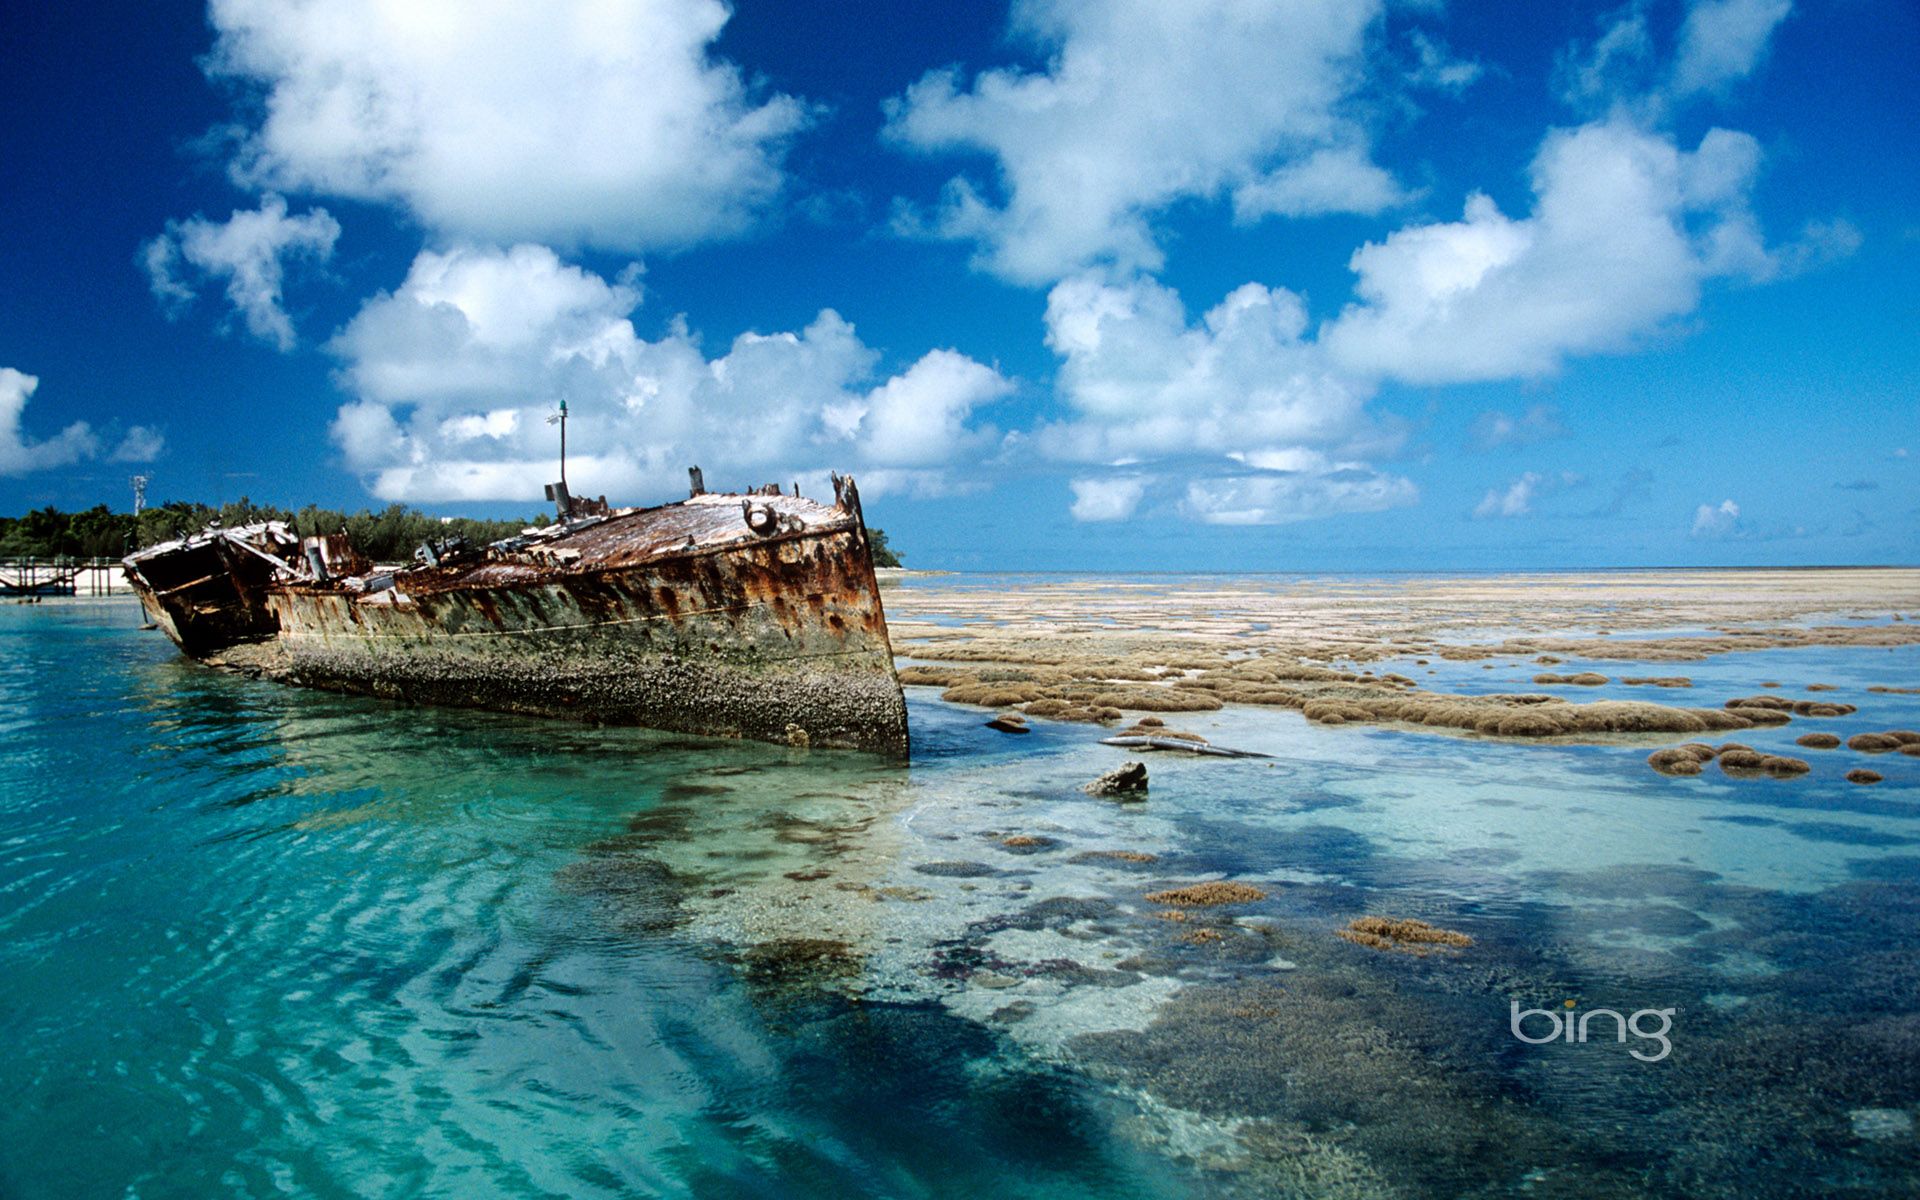 THE BEST IMAGES FOR DESKTOP: Shipwreck on Heron Island, Australia